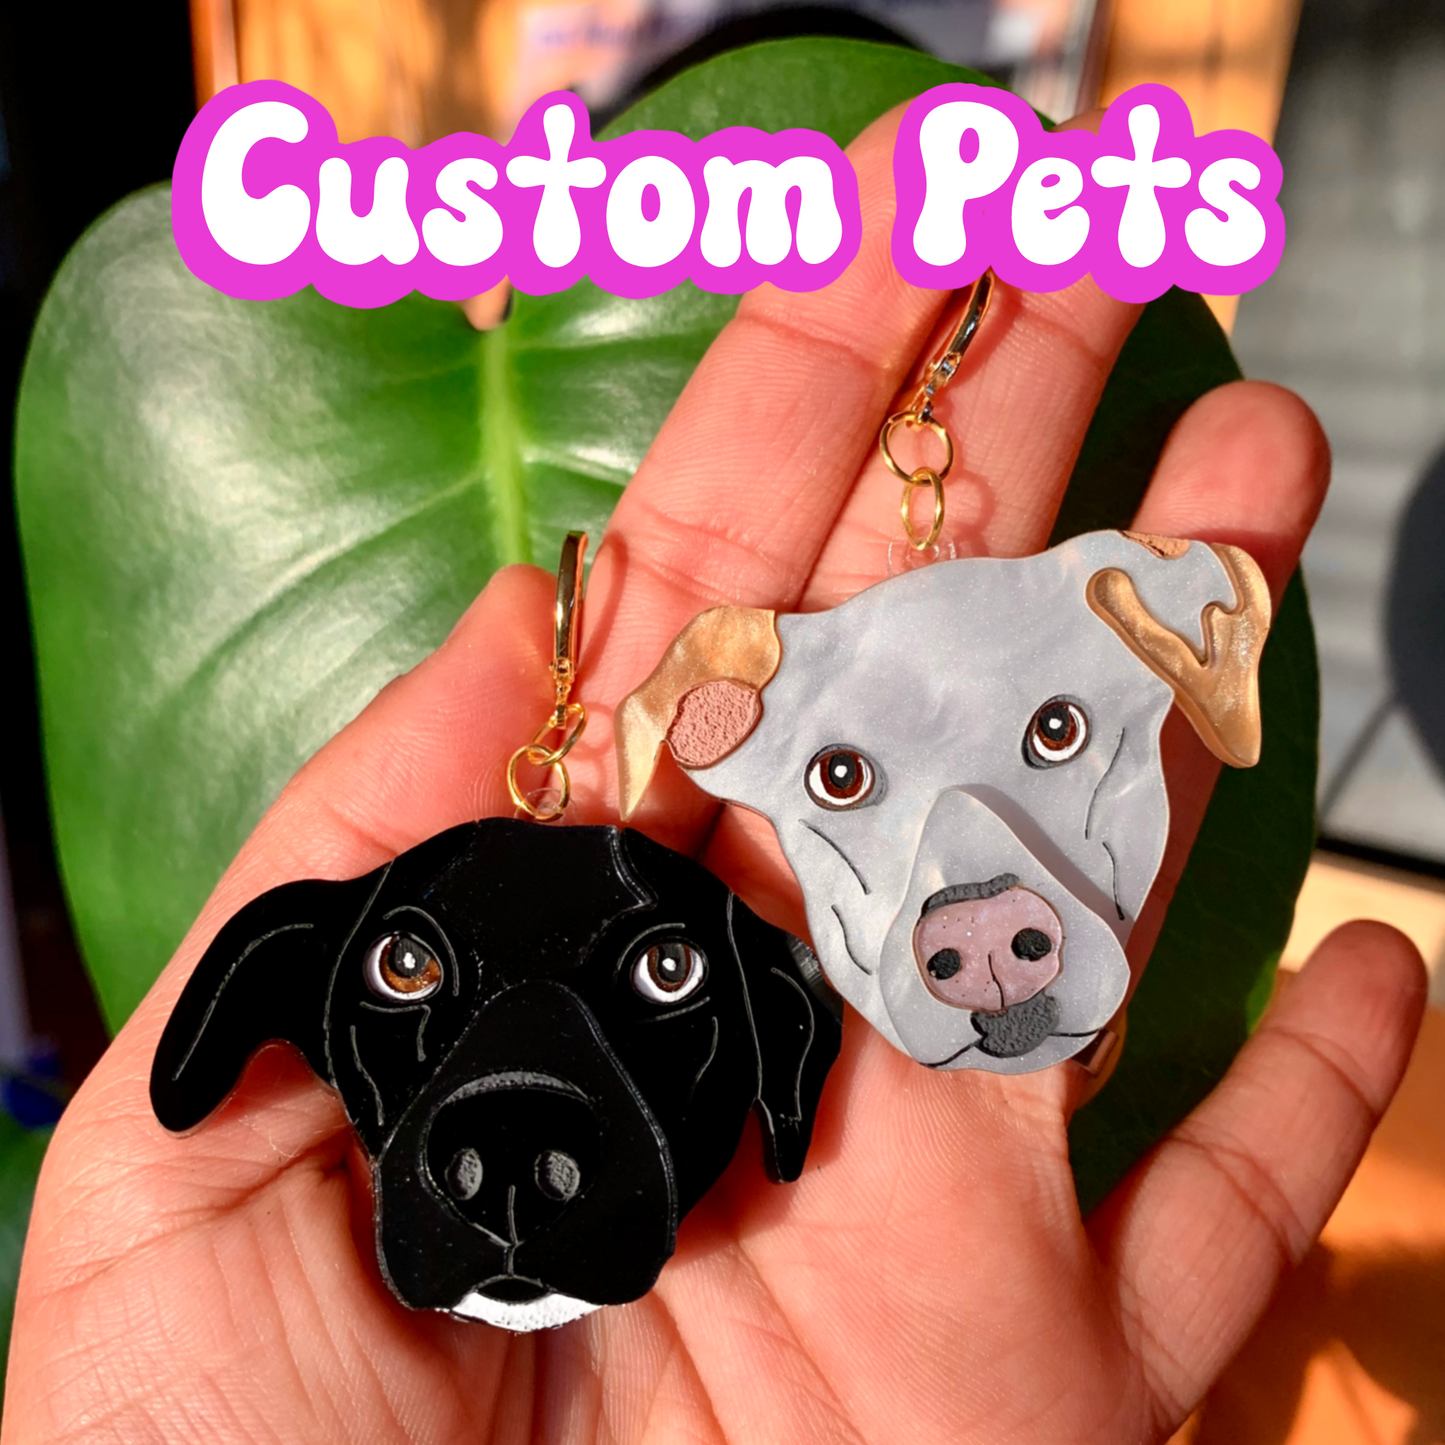 Custom Pet Earrings and Bolo Ties